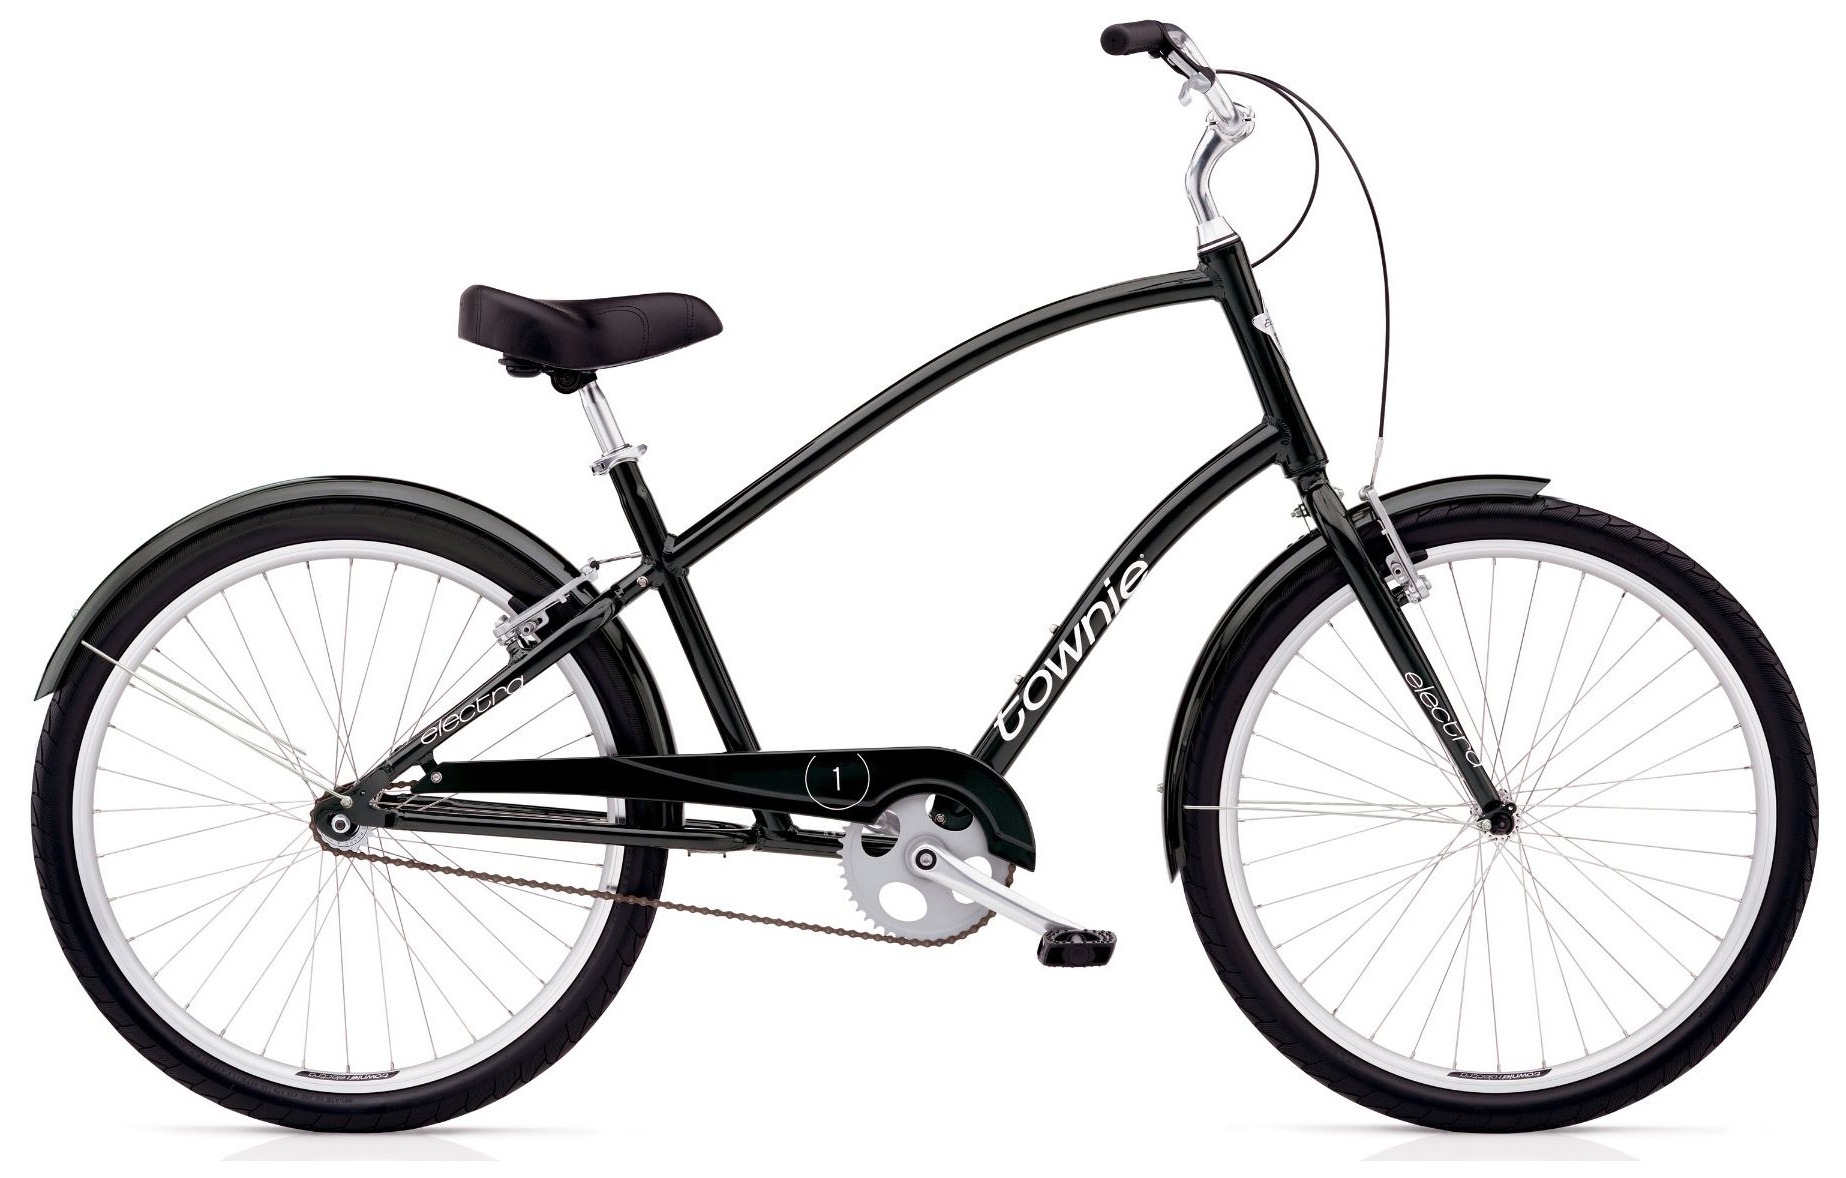  Велосипед Electra Townie Original 1 2019